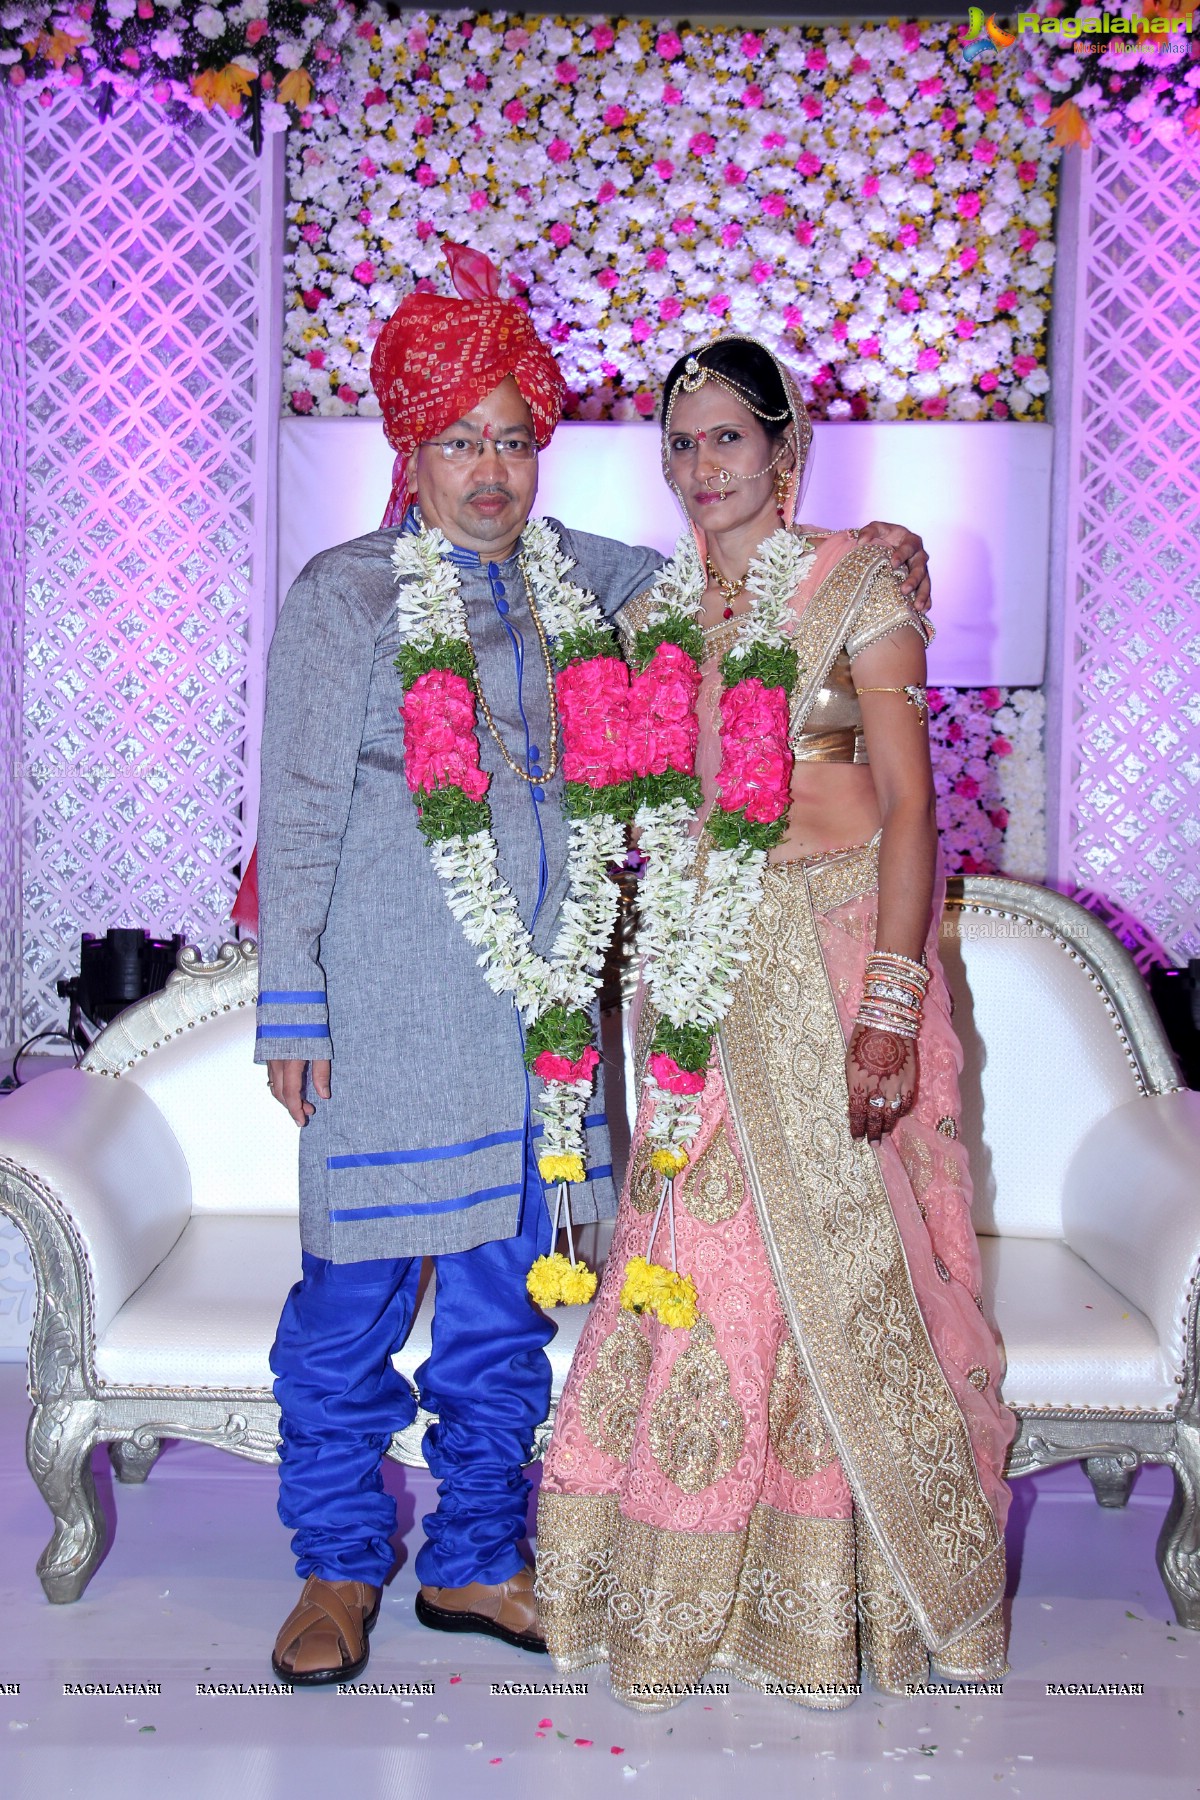 Pre Wedding Bash of Archana Jain - Organised by Renu - B L Bhandari at Dreamland Garden, Balamrai, Hyderabad